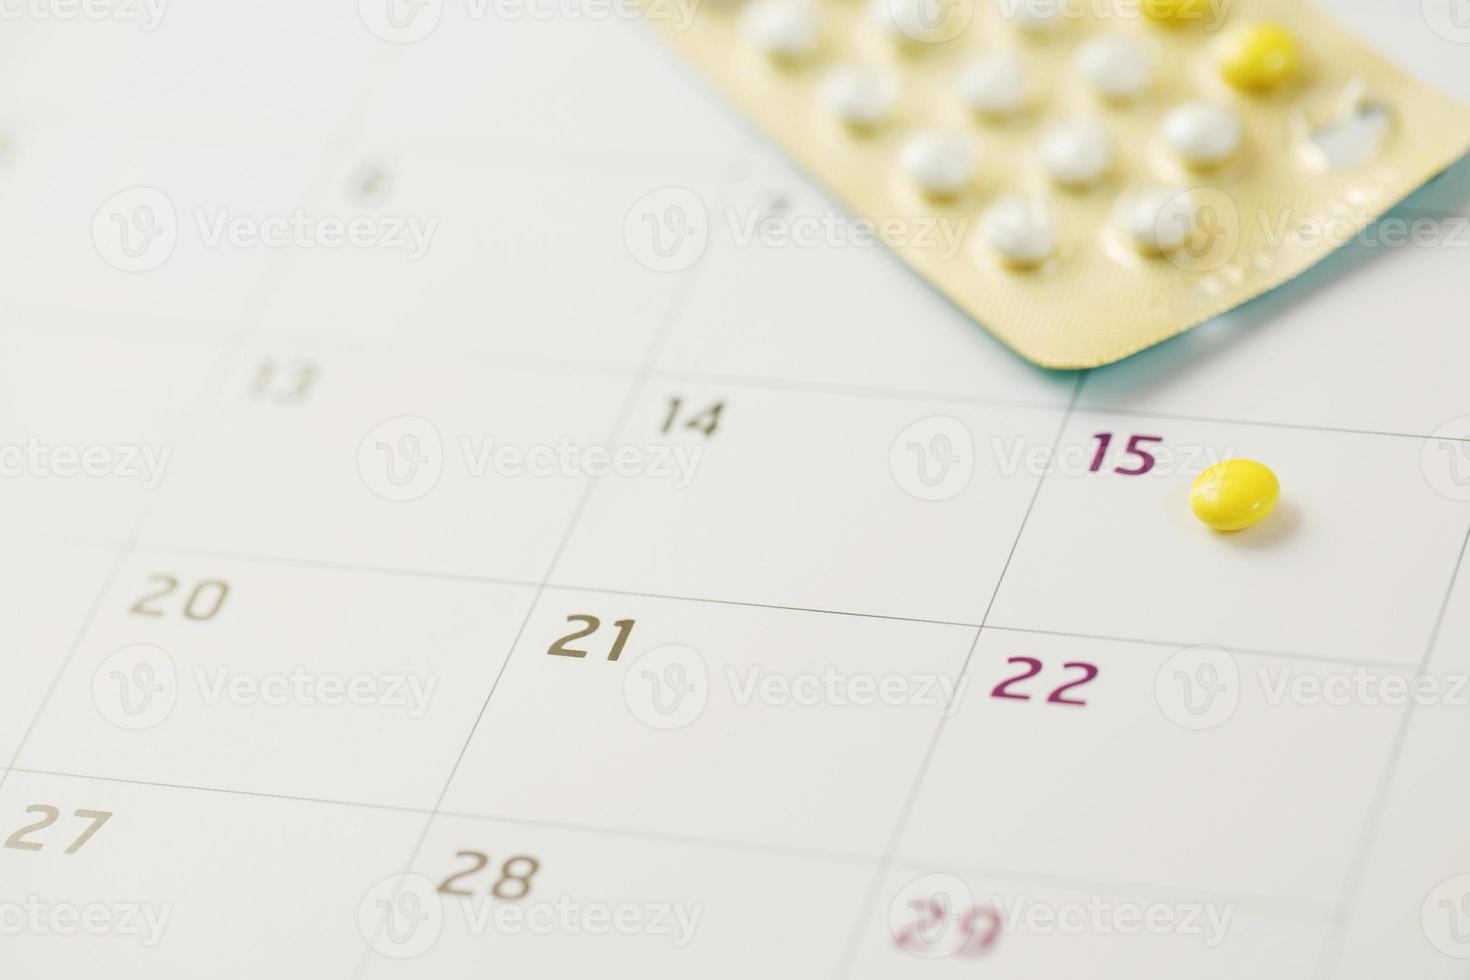 contraceptive control pills on date of calendar background. health care and medicine Birth control concept. photo